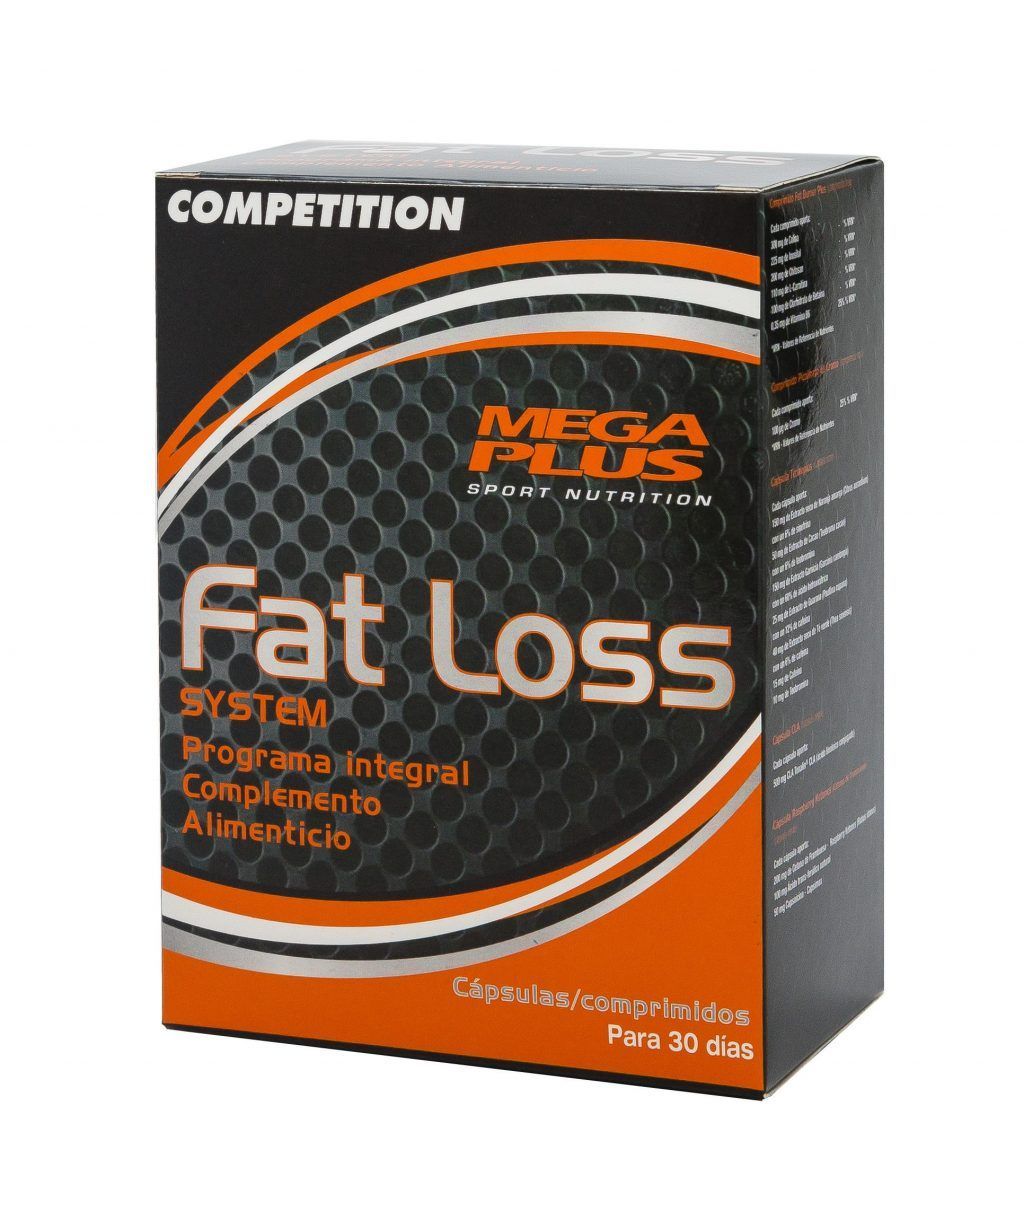 FAT LOSS SYSTEM 30 PACKS MEGAPLUS